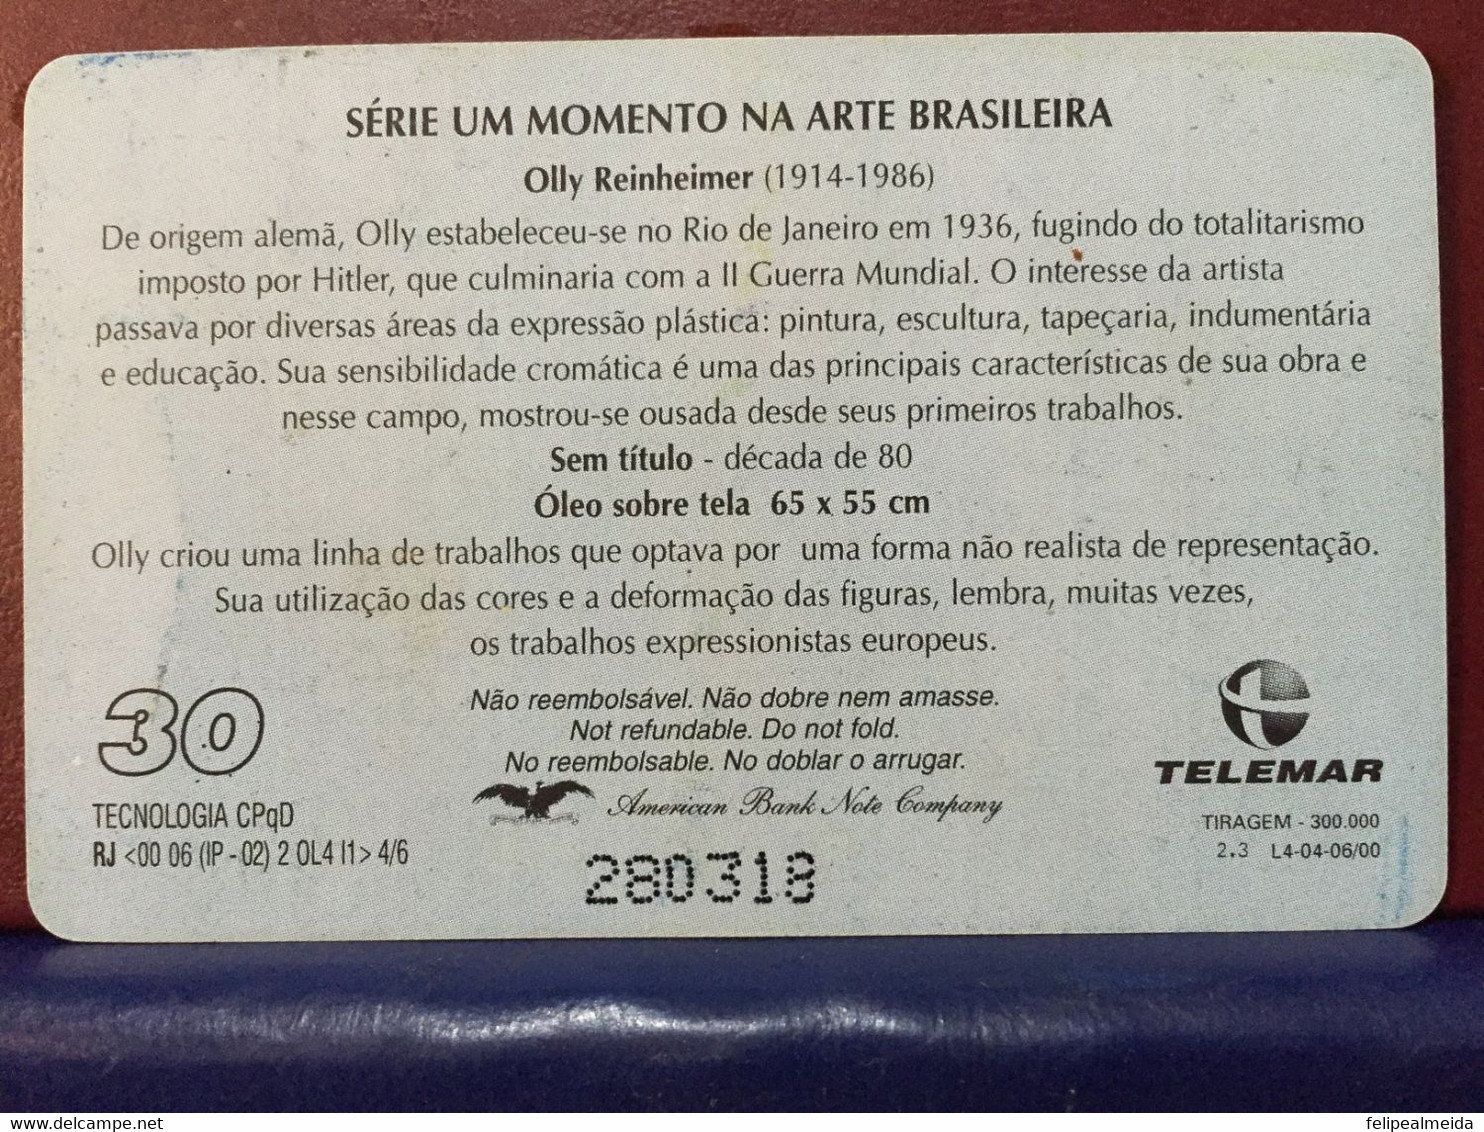 Phone Card Manufactured By Telemar In 2000 - Series A Moment In Brazilian Art - Artist Olly Reinheimer - Schilderijen